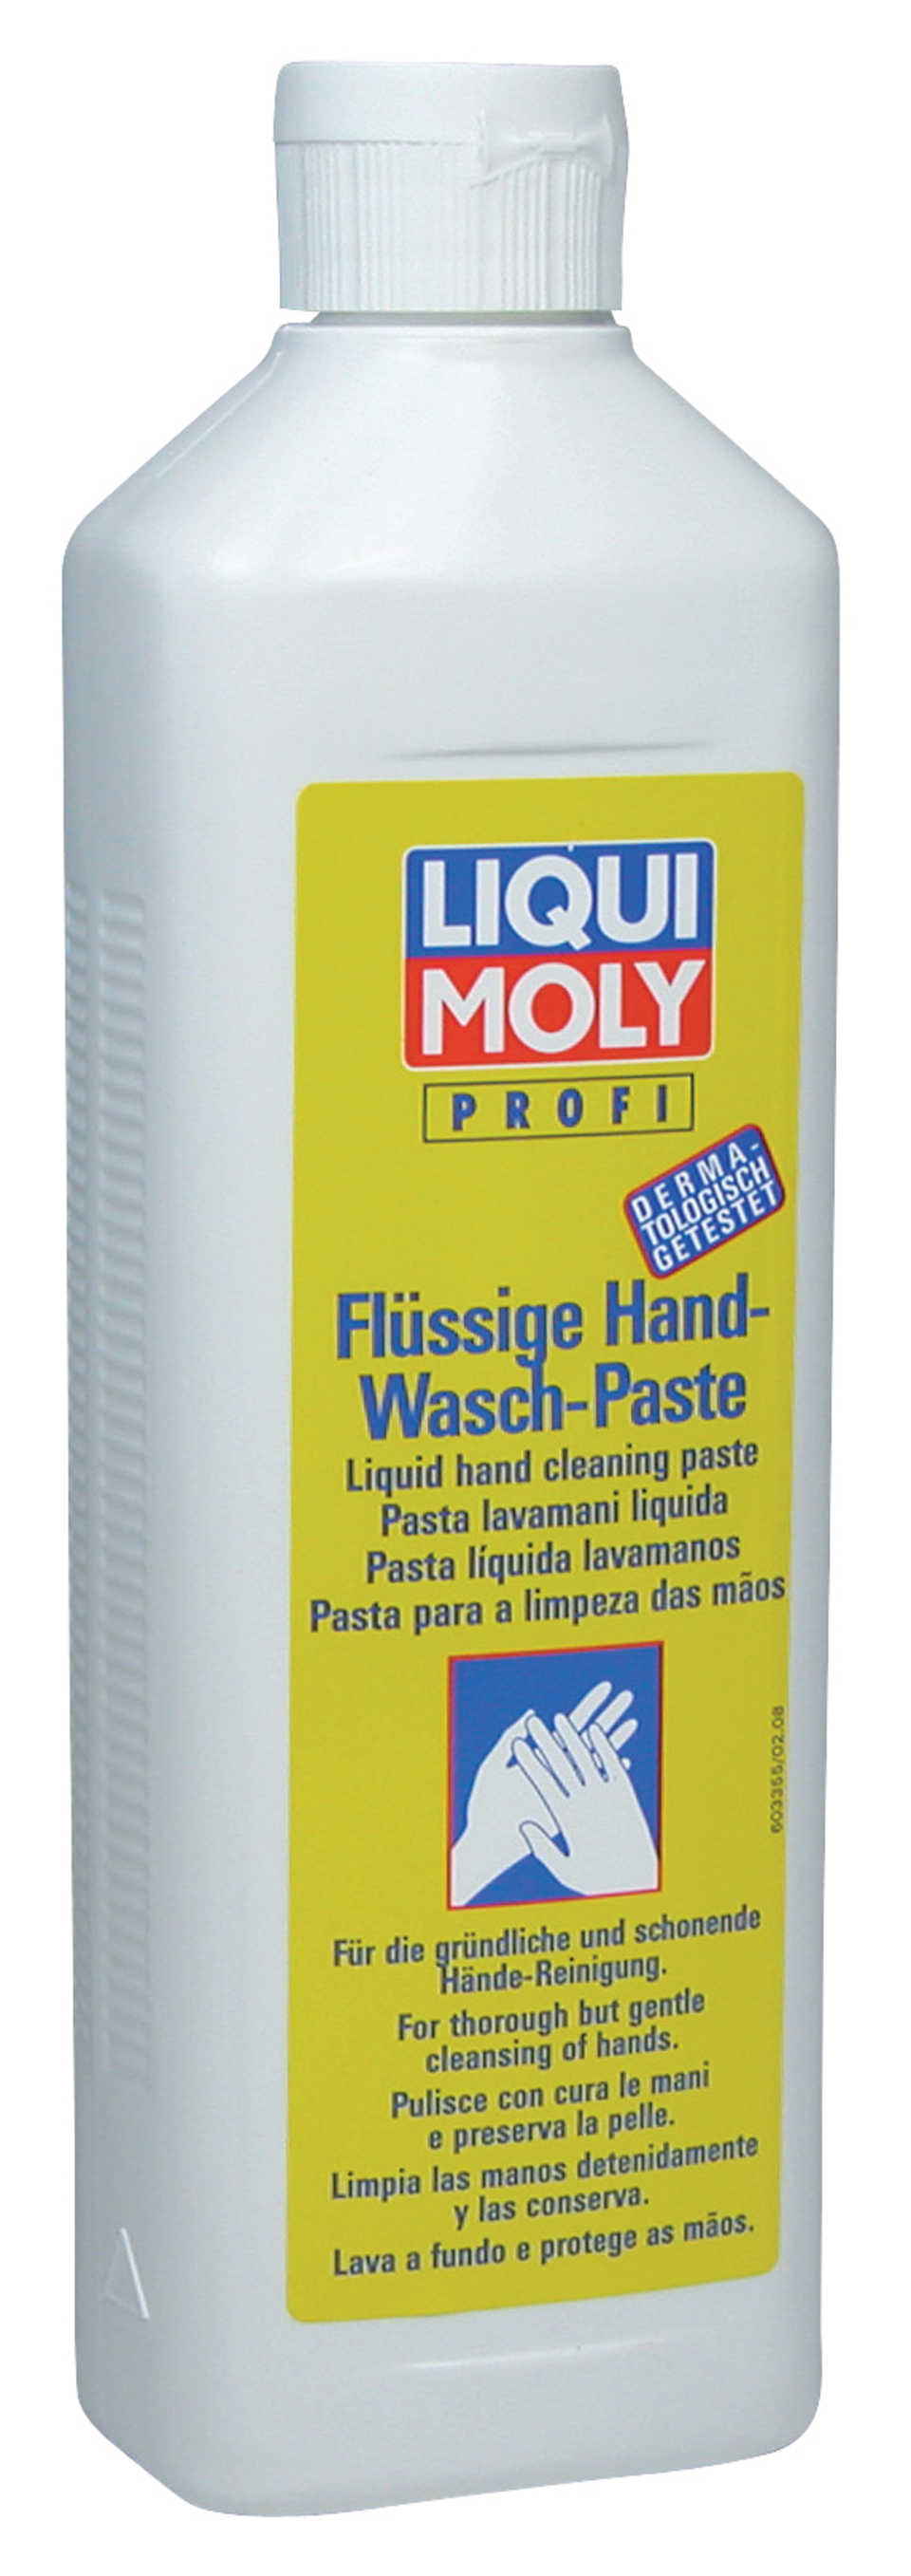 Жидкая паста дочистки рук Flussige Hand-Wasch-Paste (0,5л) 8053